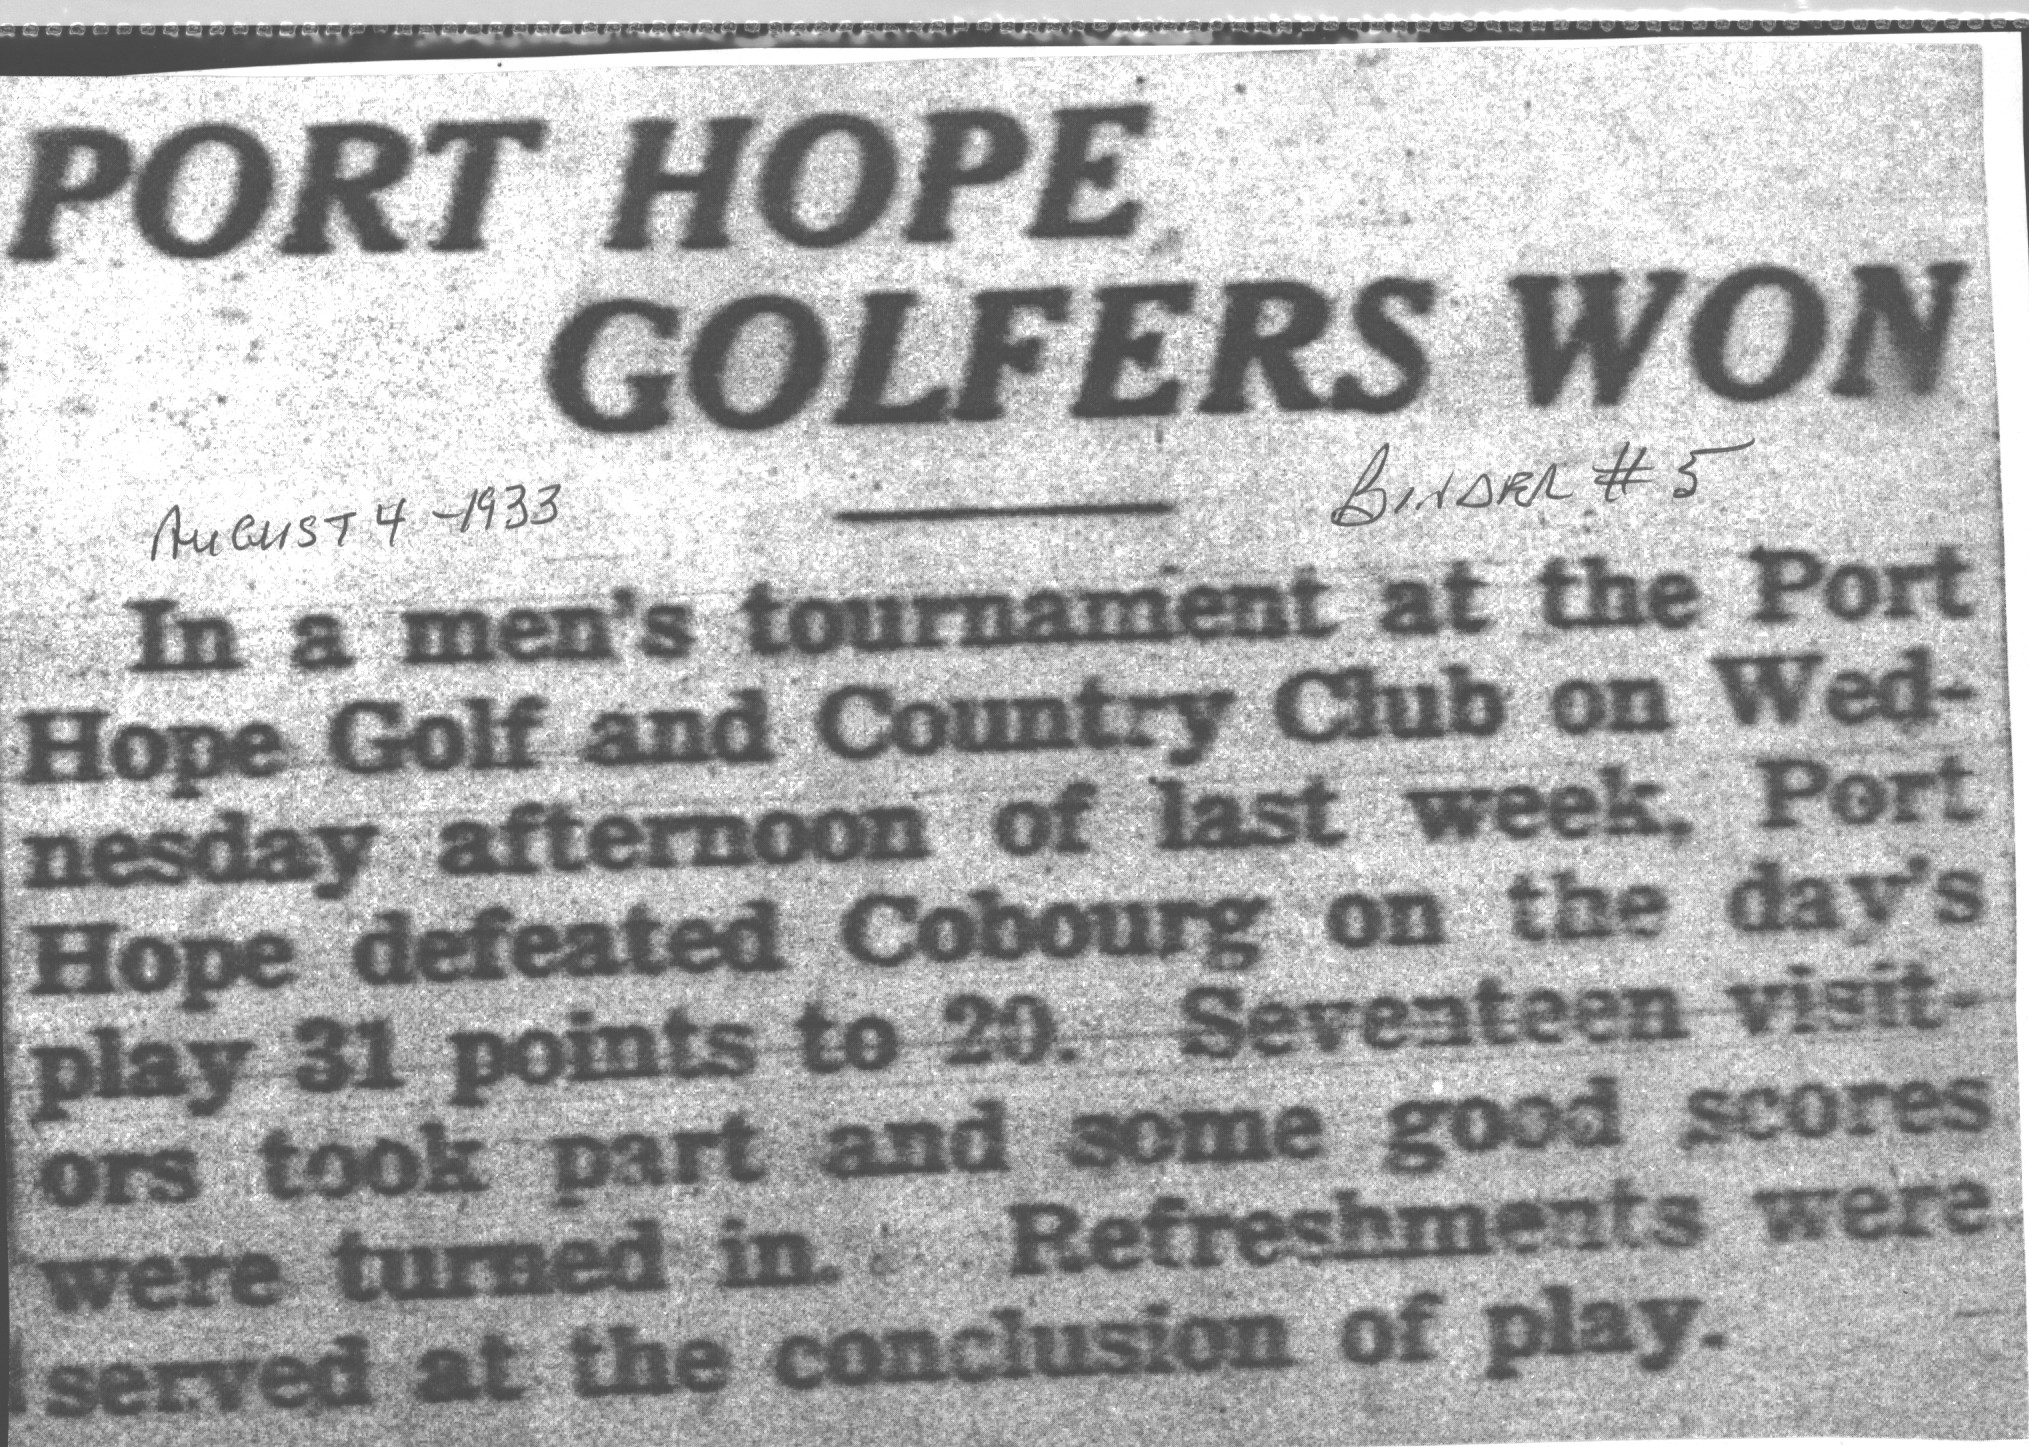 1933-08-04 Golf -Cobourg club at PH